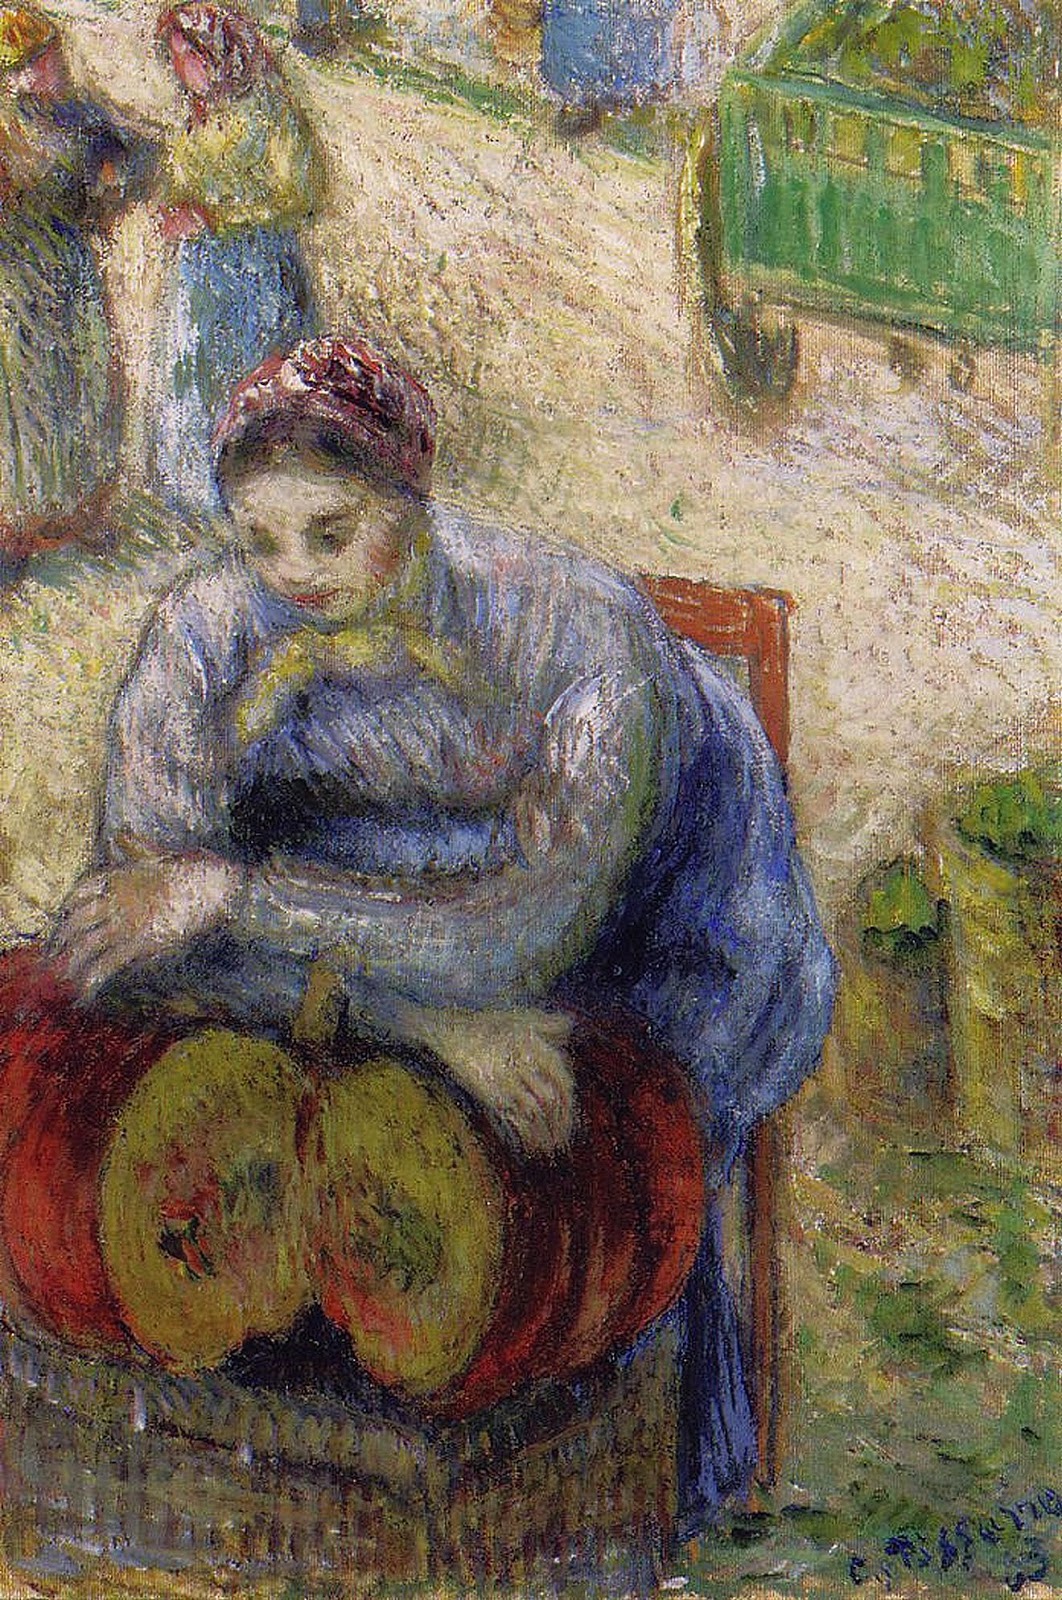 Camille+Pissarro-1830-1903 (228).jpg